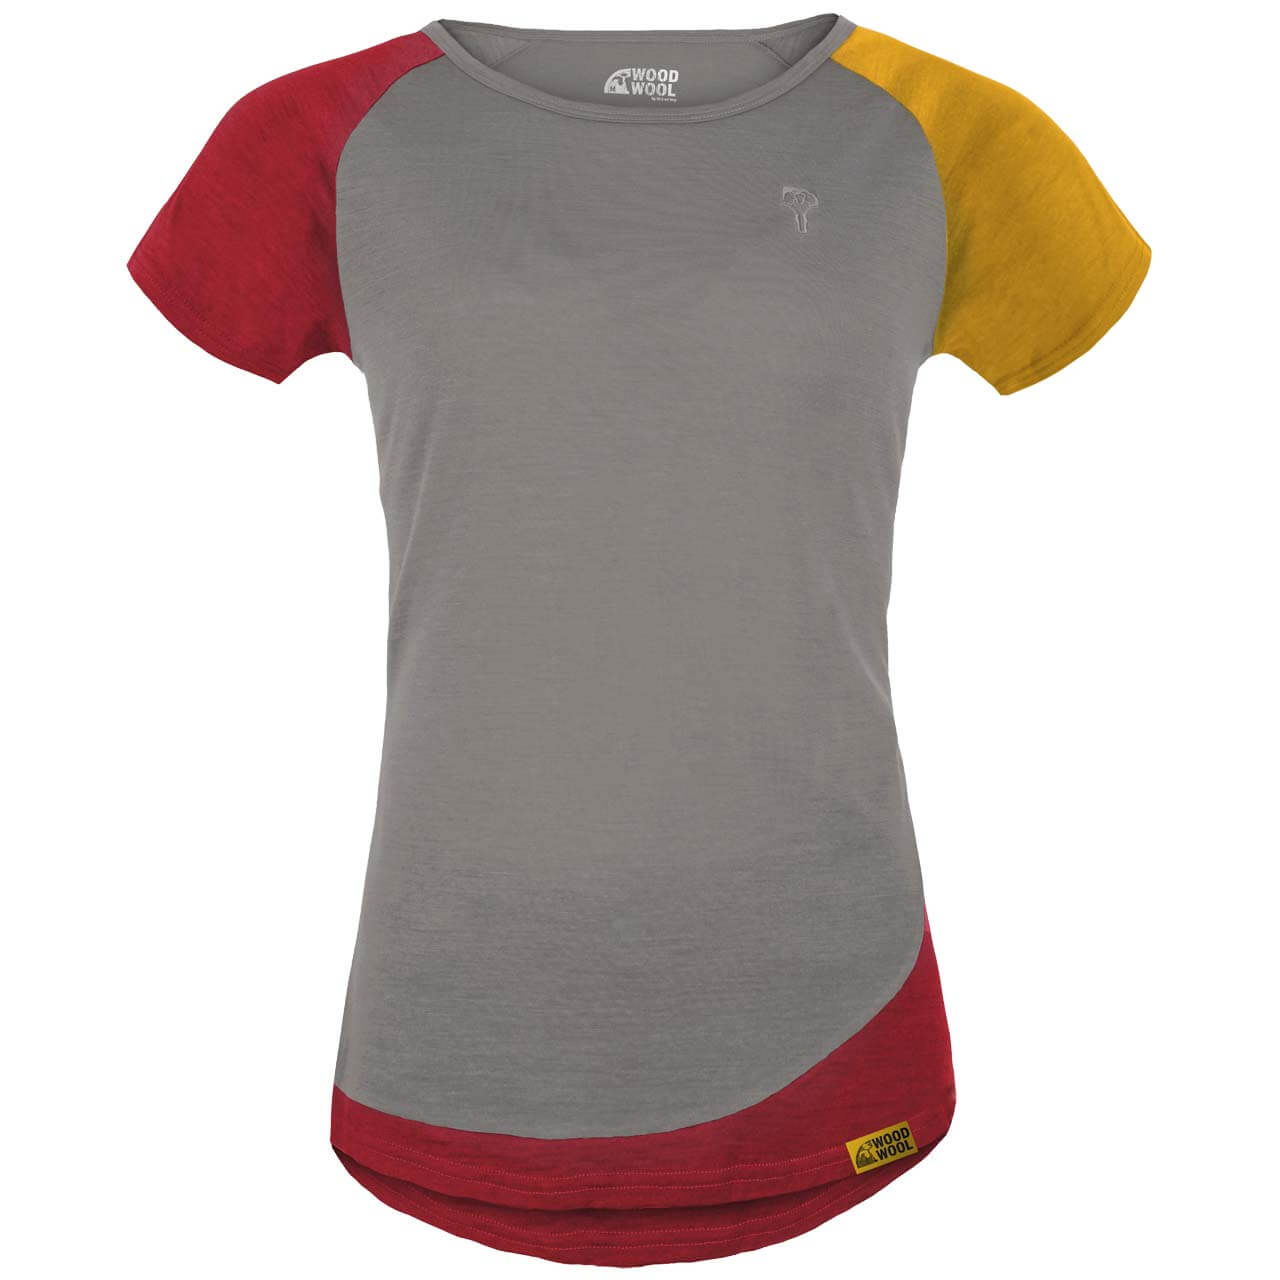 Grüezi Bag WoodWool Janeway T-Shirt - Slate Grey, M von Grüezi Bag}